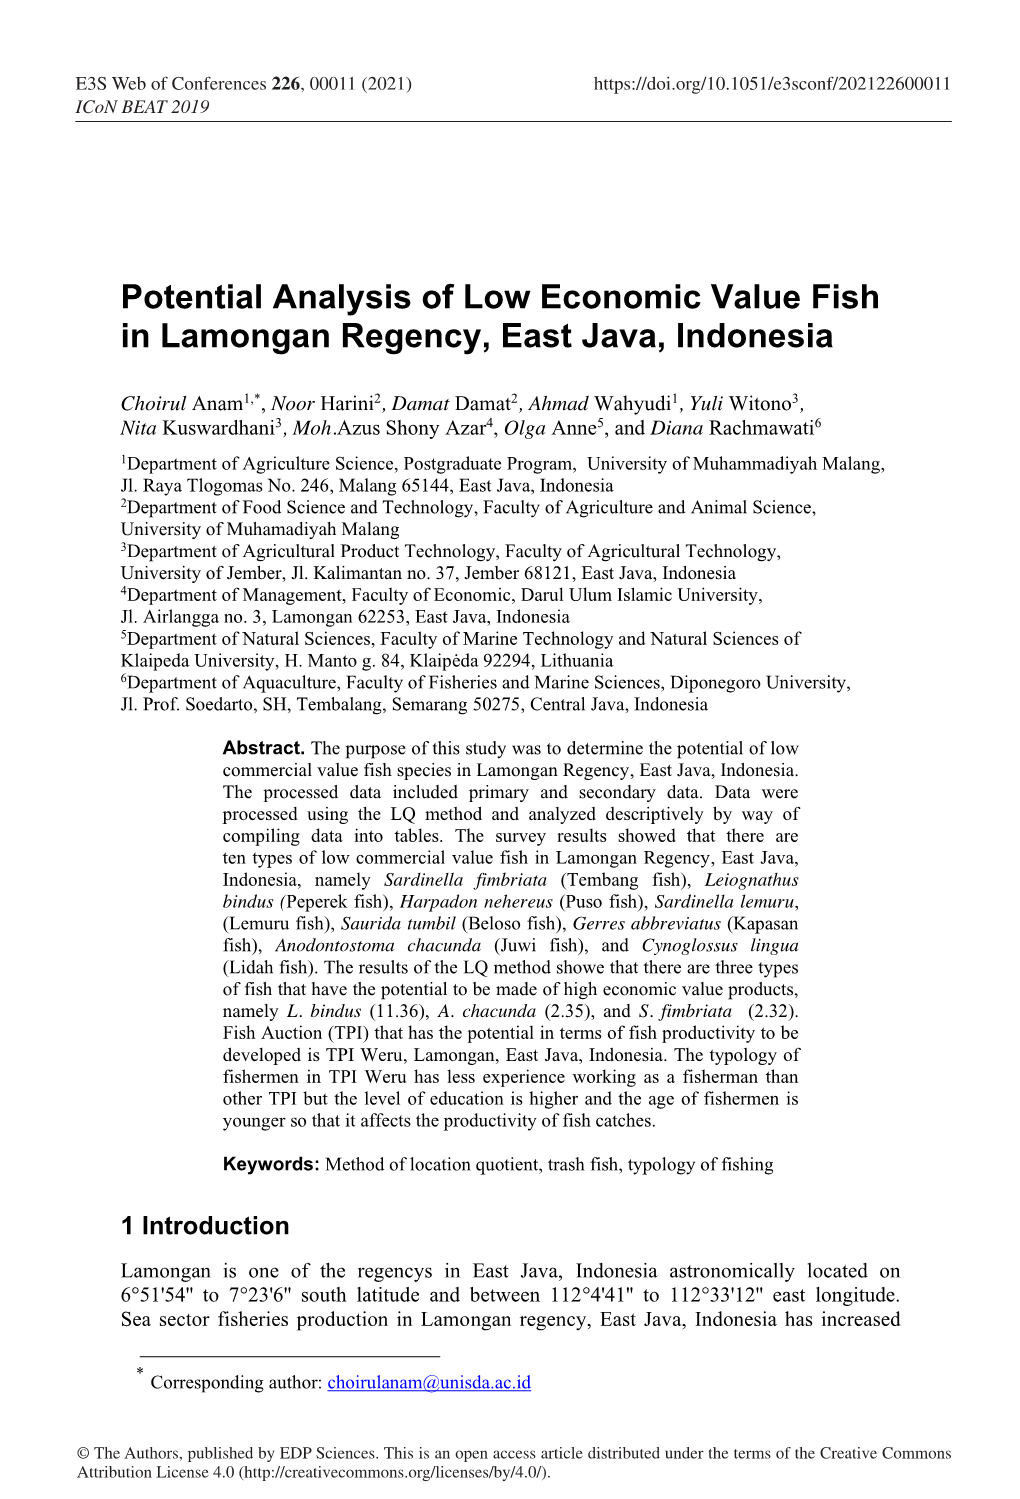 Potential Analysis of Low Economic Value Fish in Lamongan Regency, East Java, Indonesia